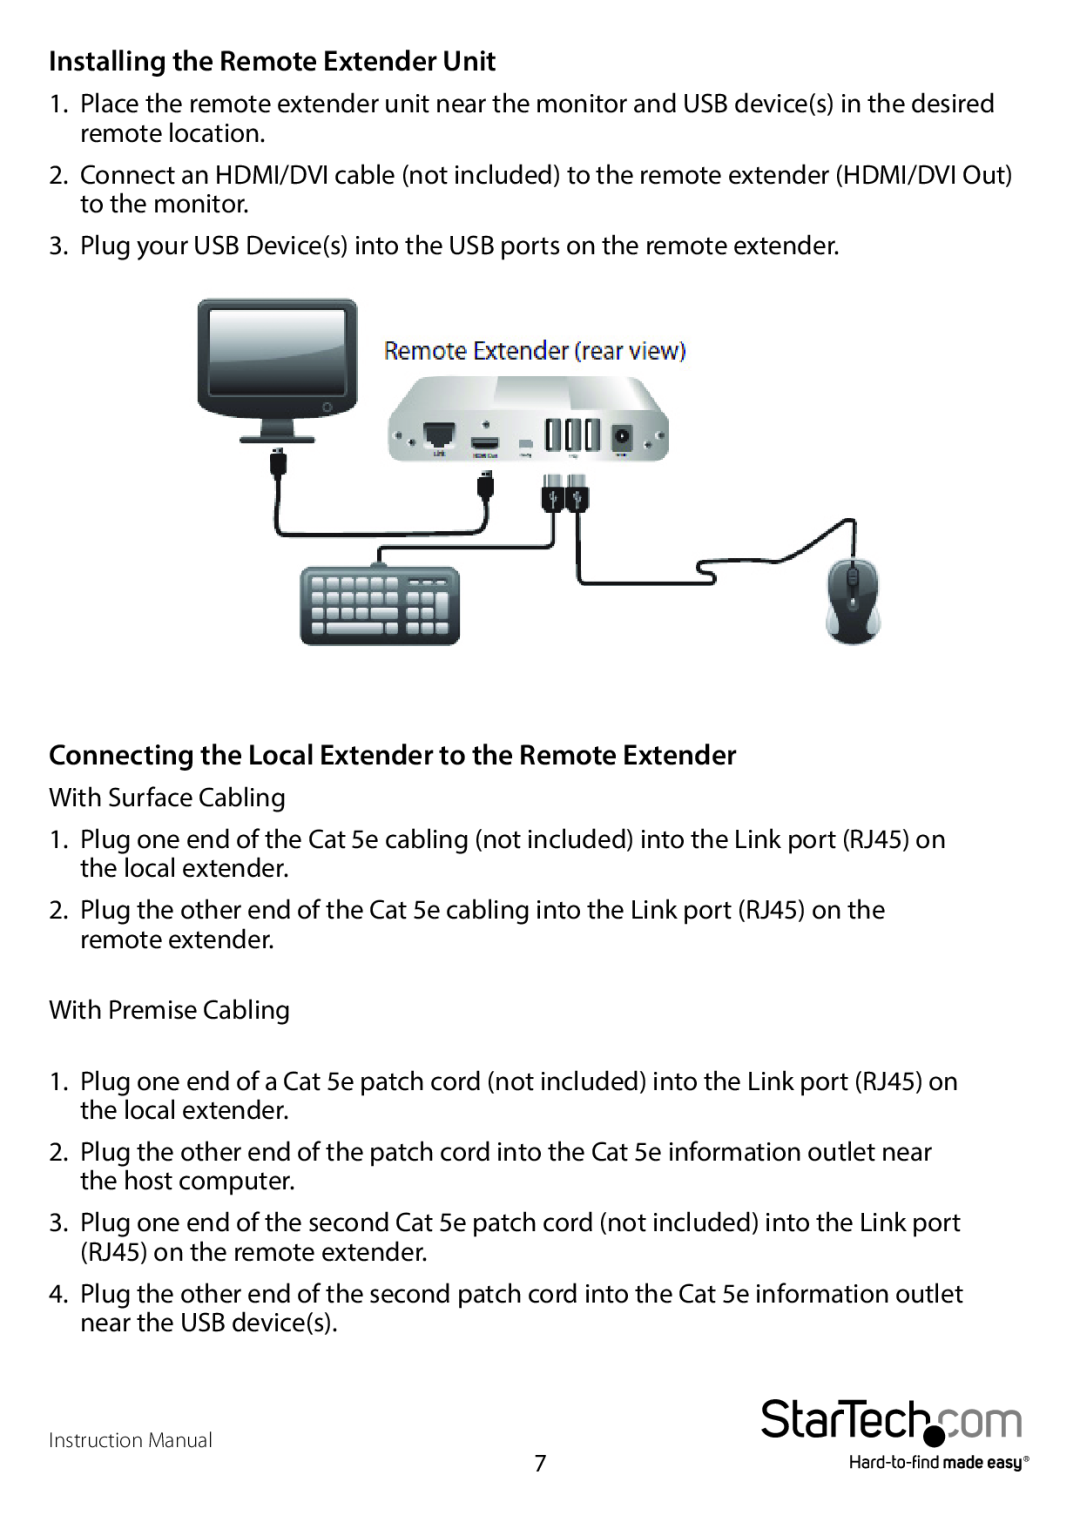 StarTech.com dvi over cat5e/6 kvm extender manual Installing the Remote Extender Unit 